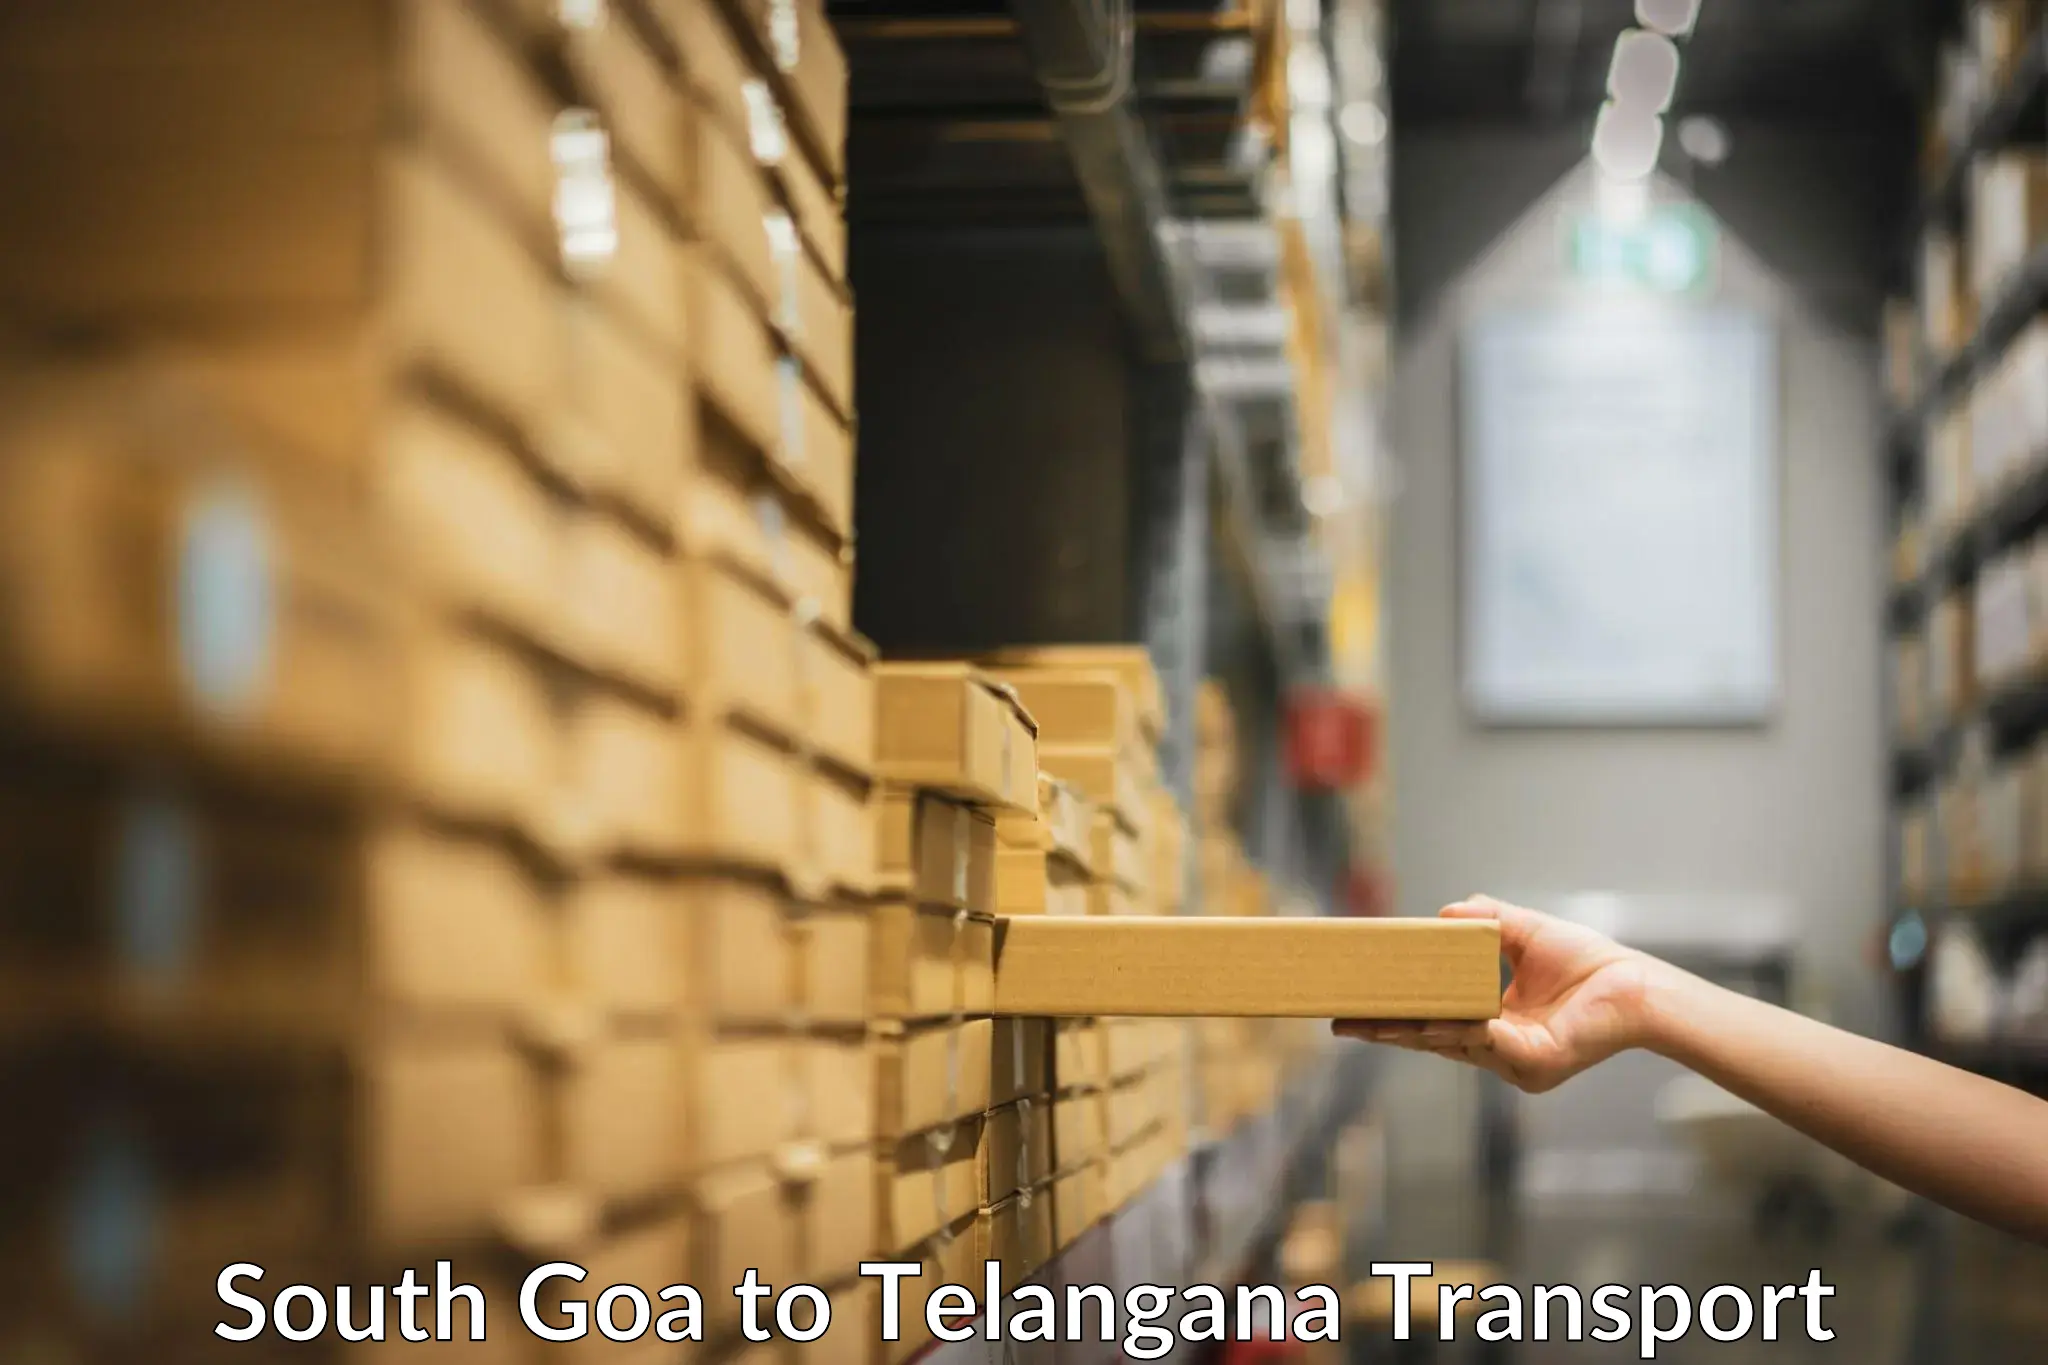 Transport shared services South Goa to Dubbak